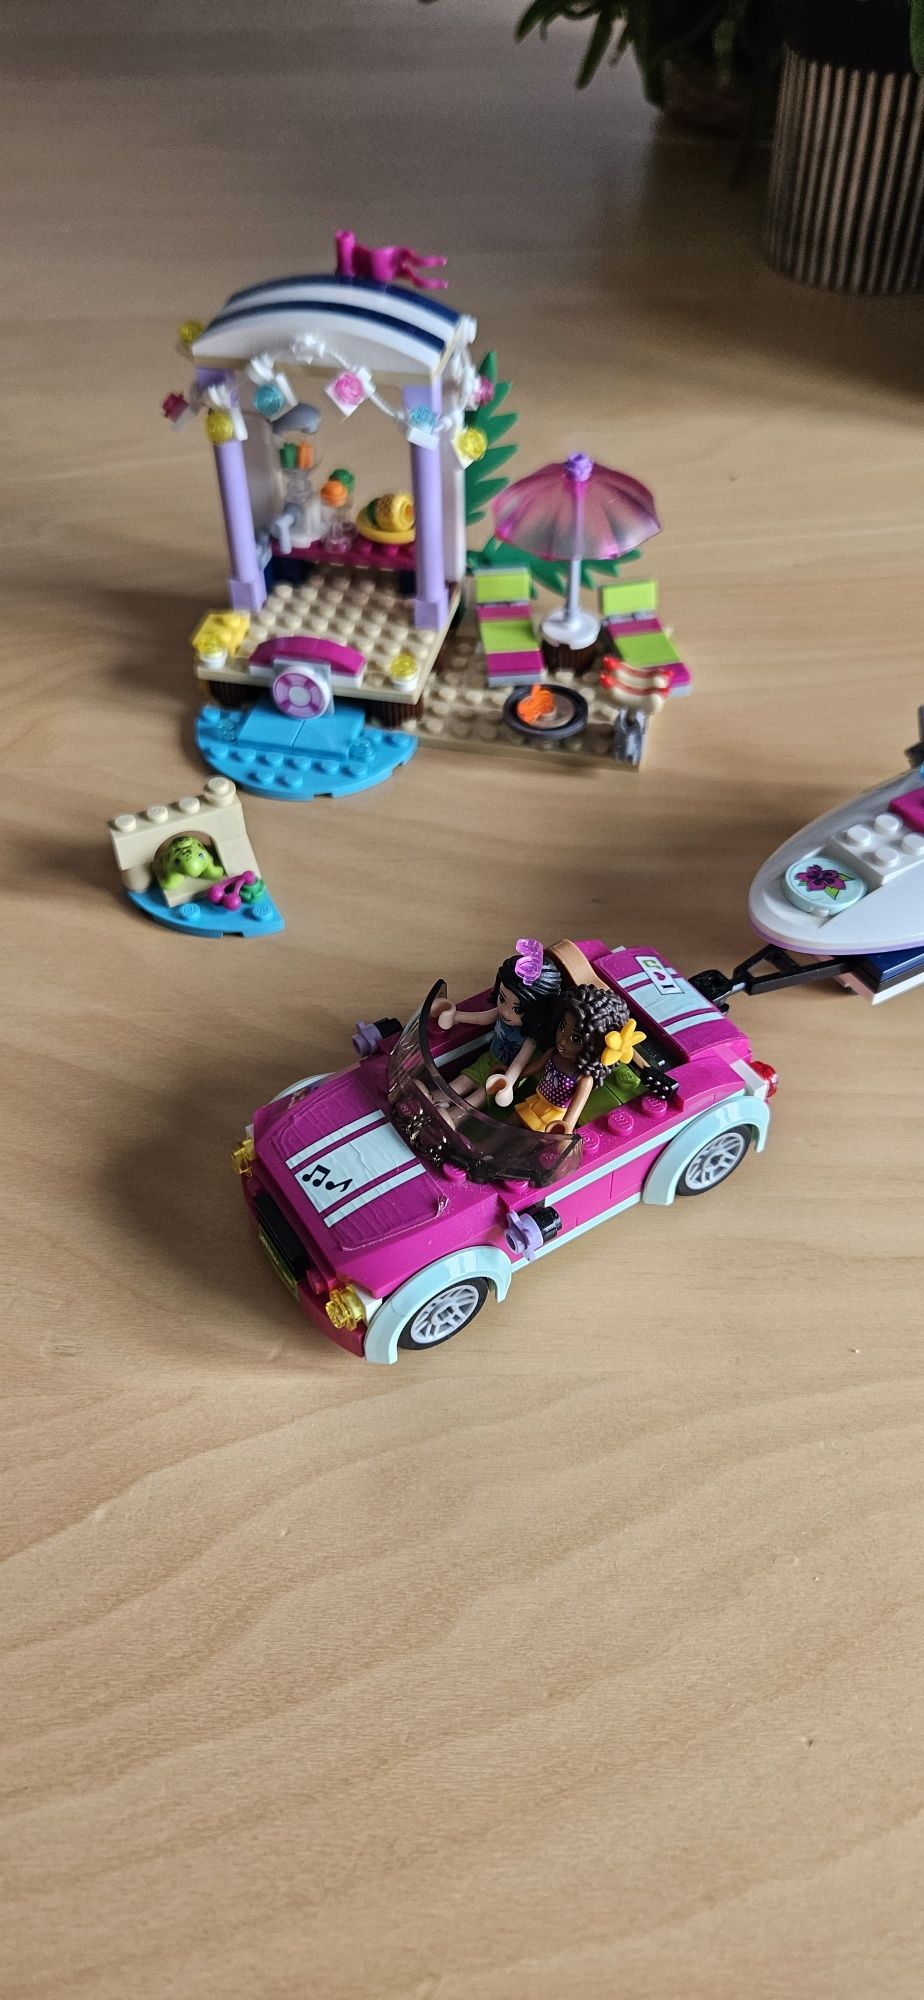 Lego Friends. Transporter motorowek Andrei.
Transporter motorówek Andr